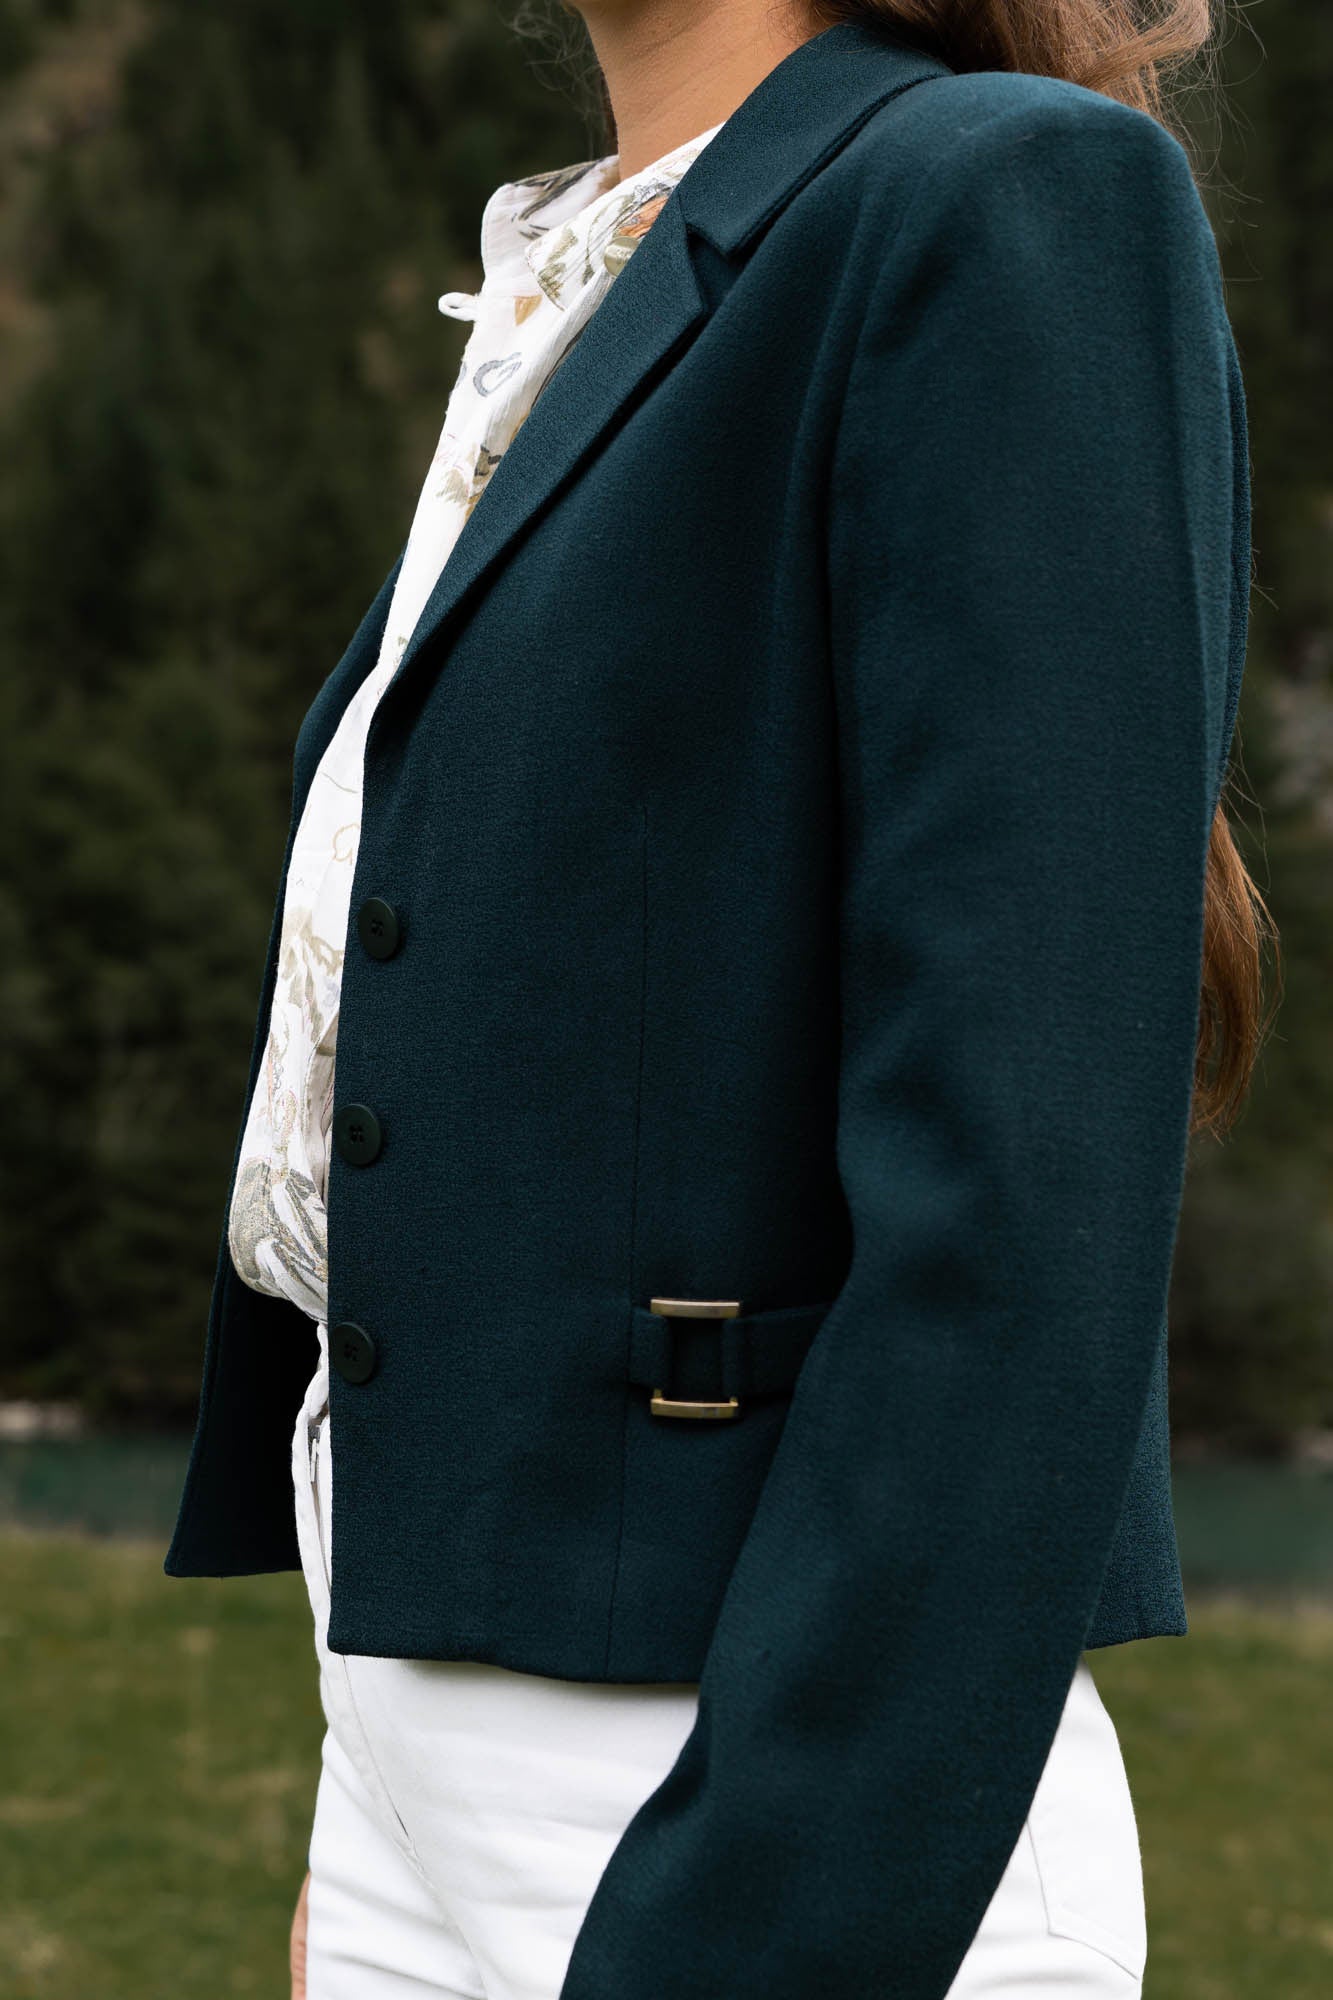 Green fitted blazer jacket